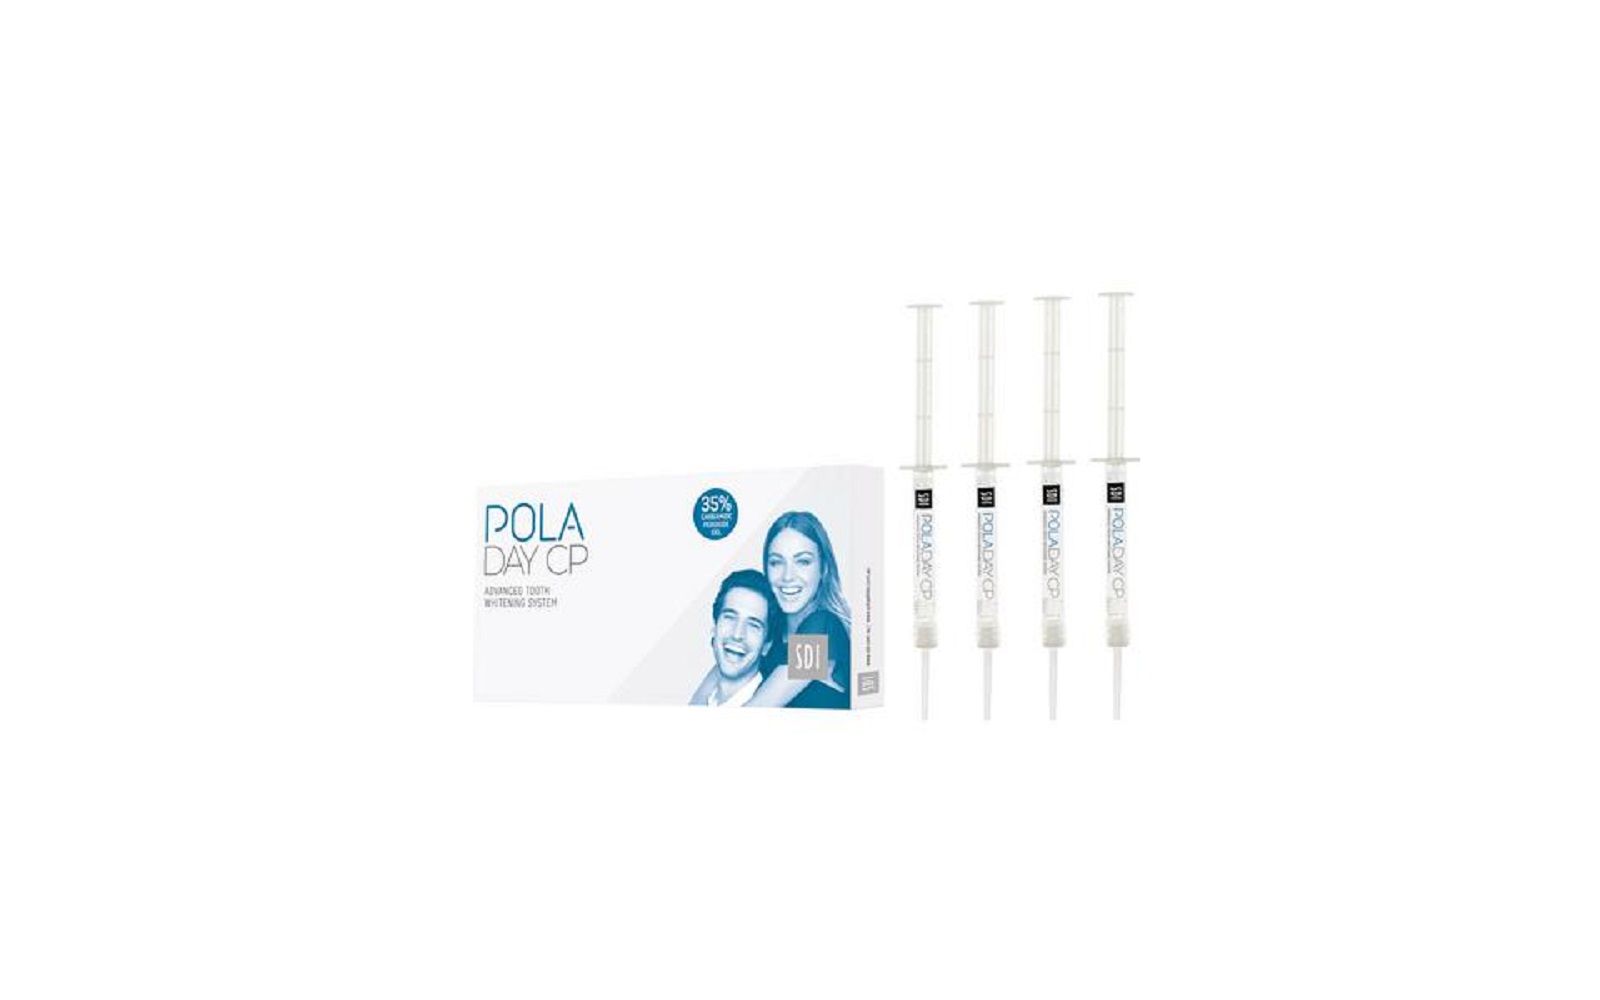 Poladay cp take-home tooth whitening system – 1. 3 g syringe, 4/pkg